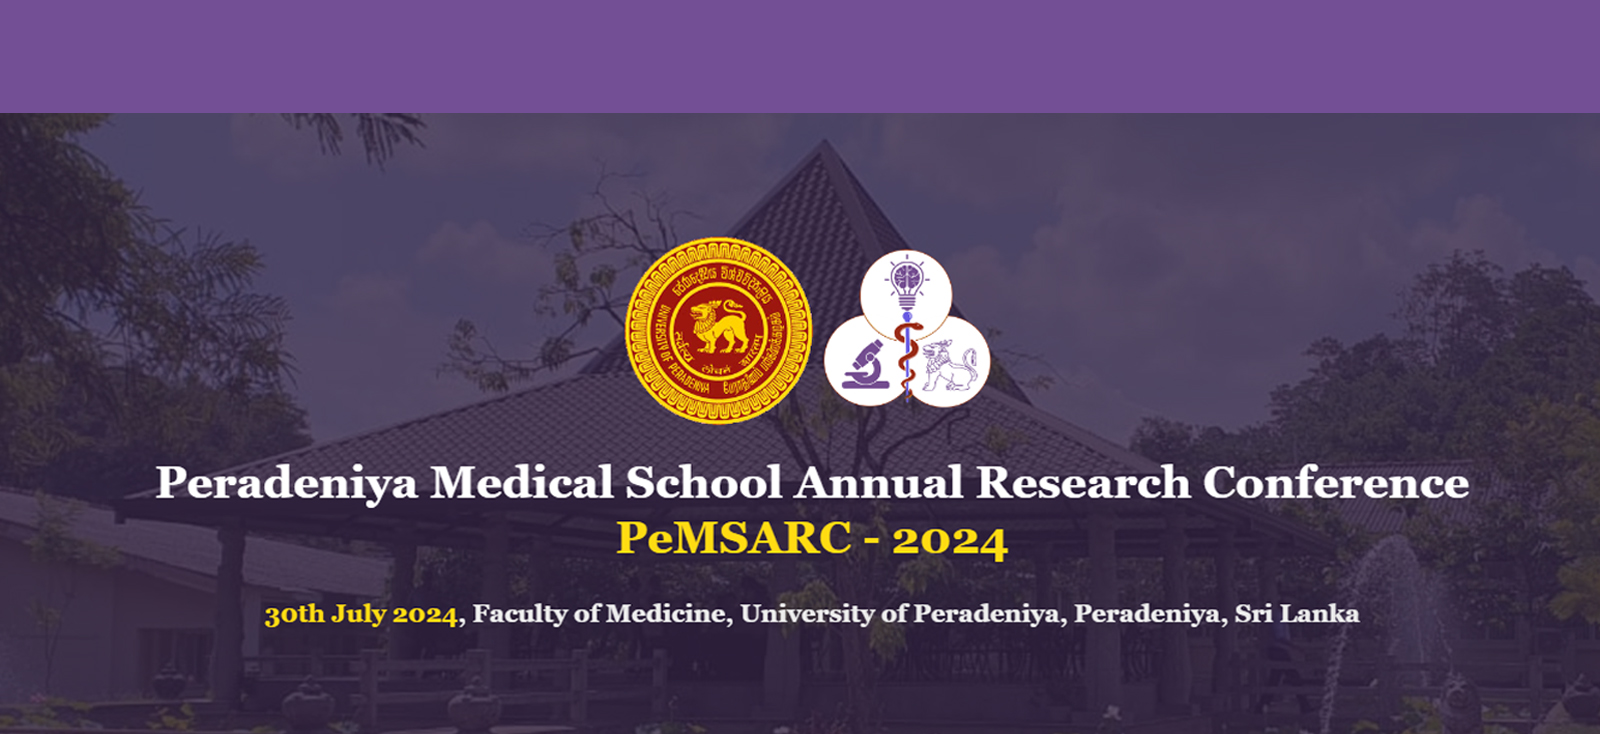 Peradeniya Medical School Annual Research Conference - PeMSARC 2024